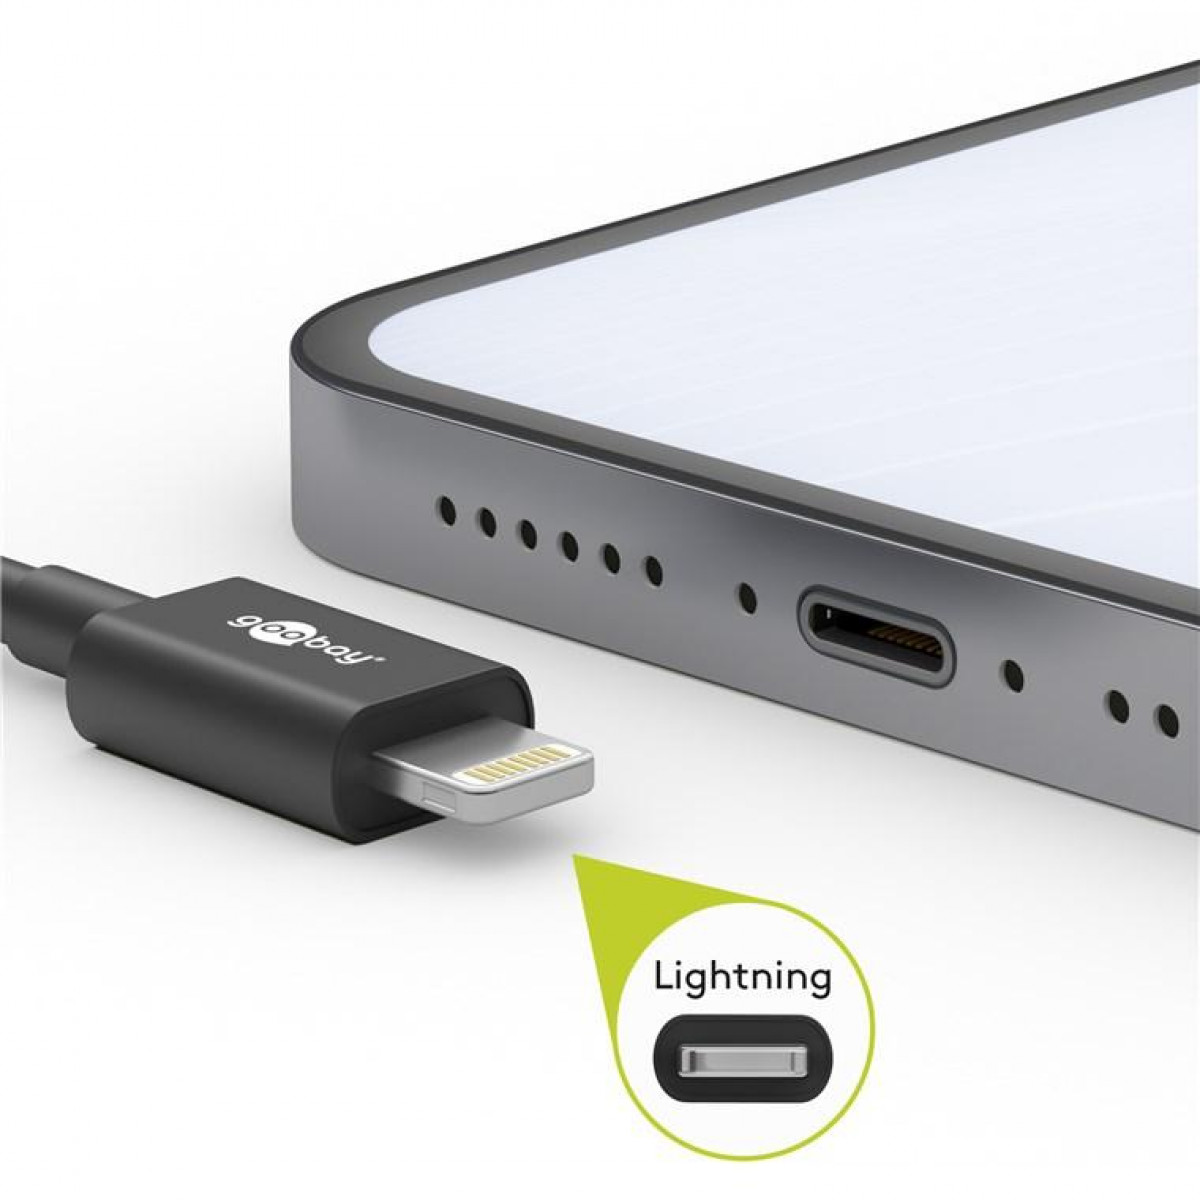 GOOBAY Lightning 0,5 Lightning Textilkabel USB-A kabel, Metallsteckern (spacegrau/silber), m mit auf